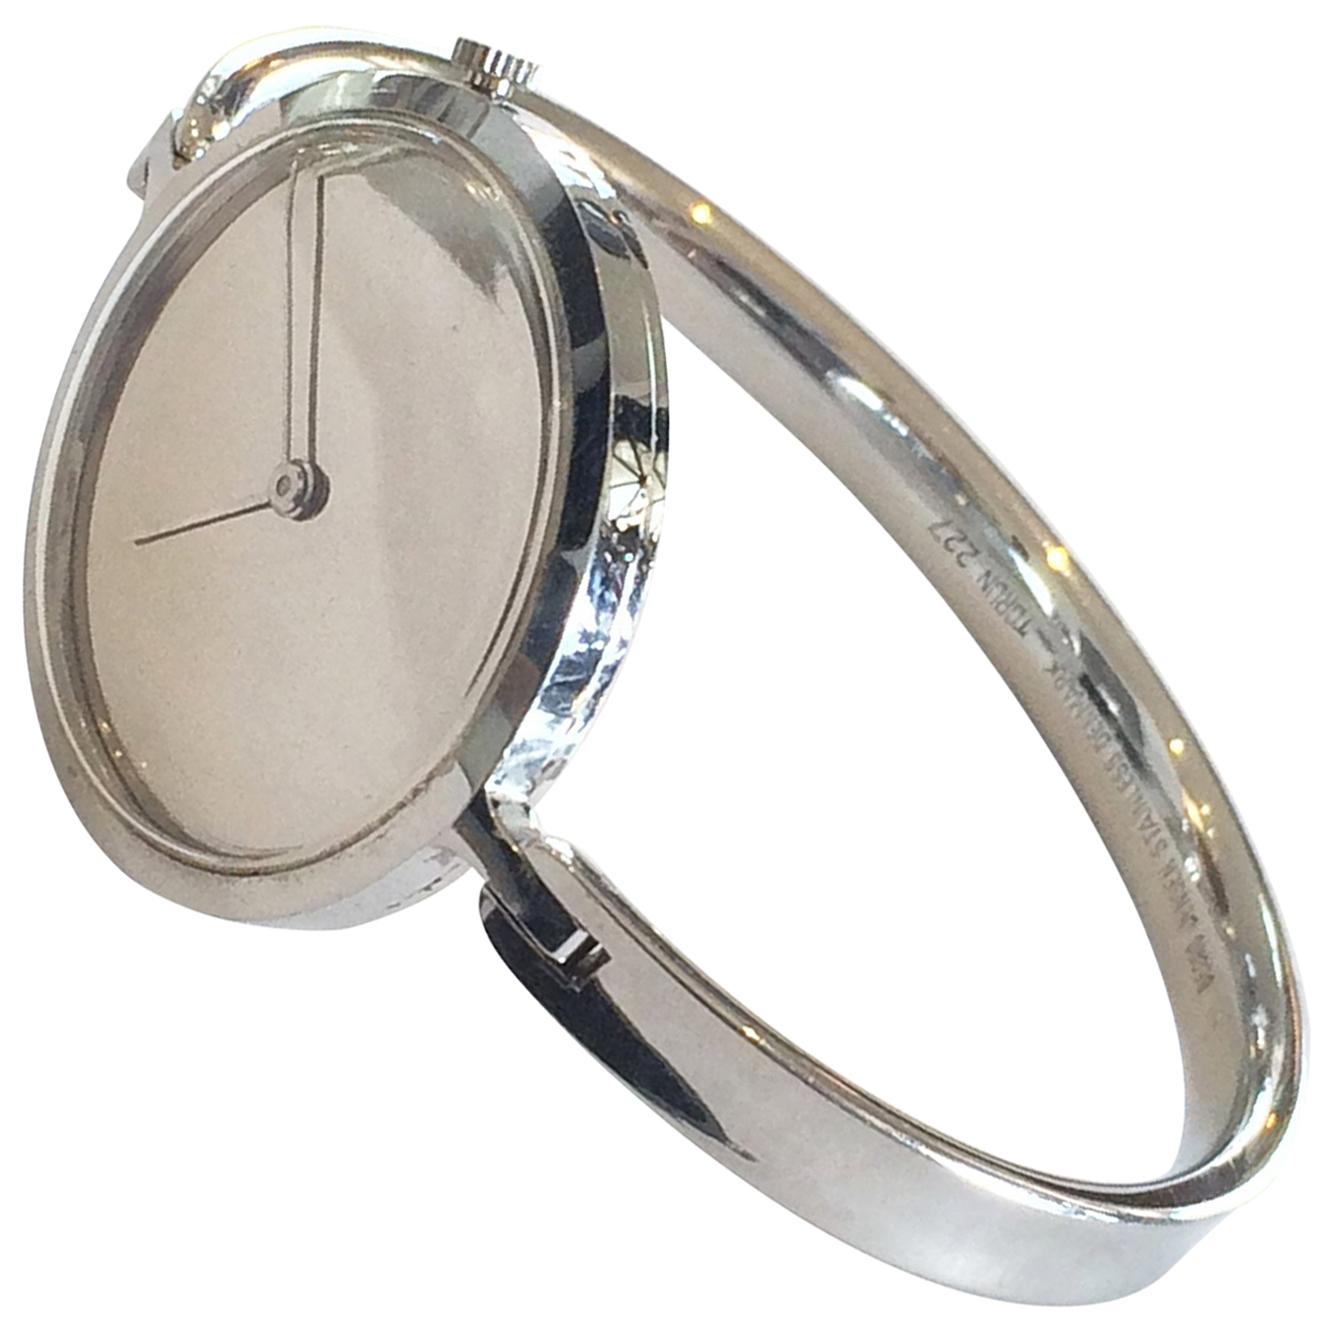 Authentic Georg Jensen Bracelet Watch by Torun Design 227